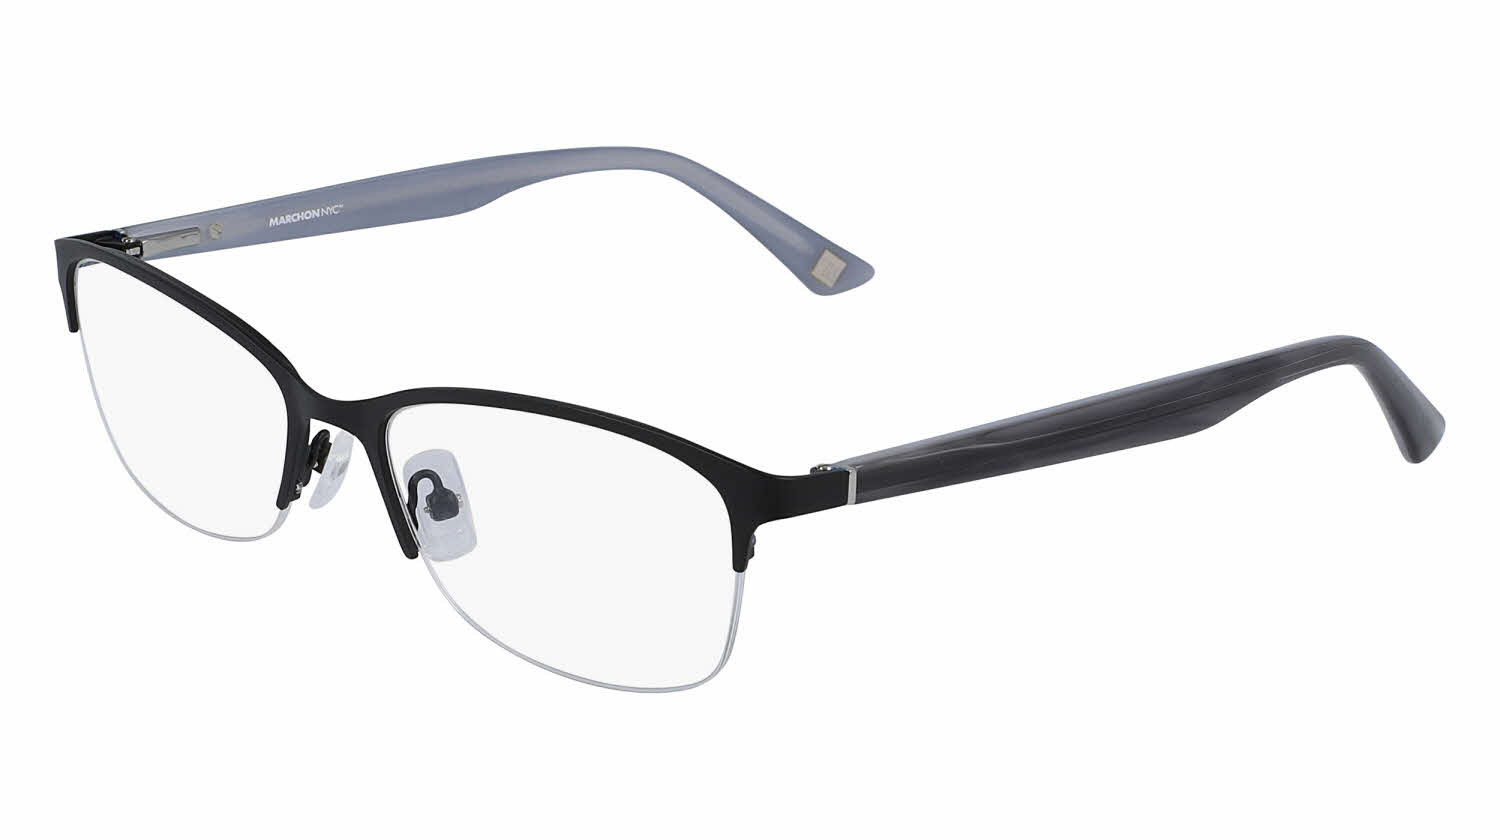 Marchon M-4008 Eyeglasses